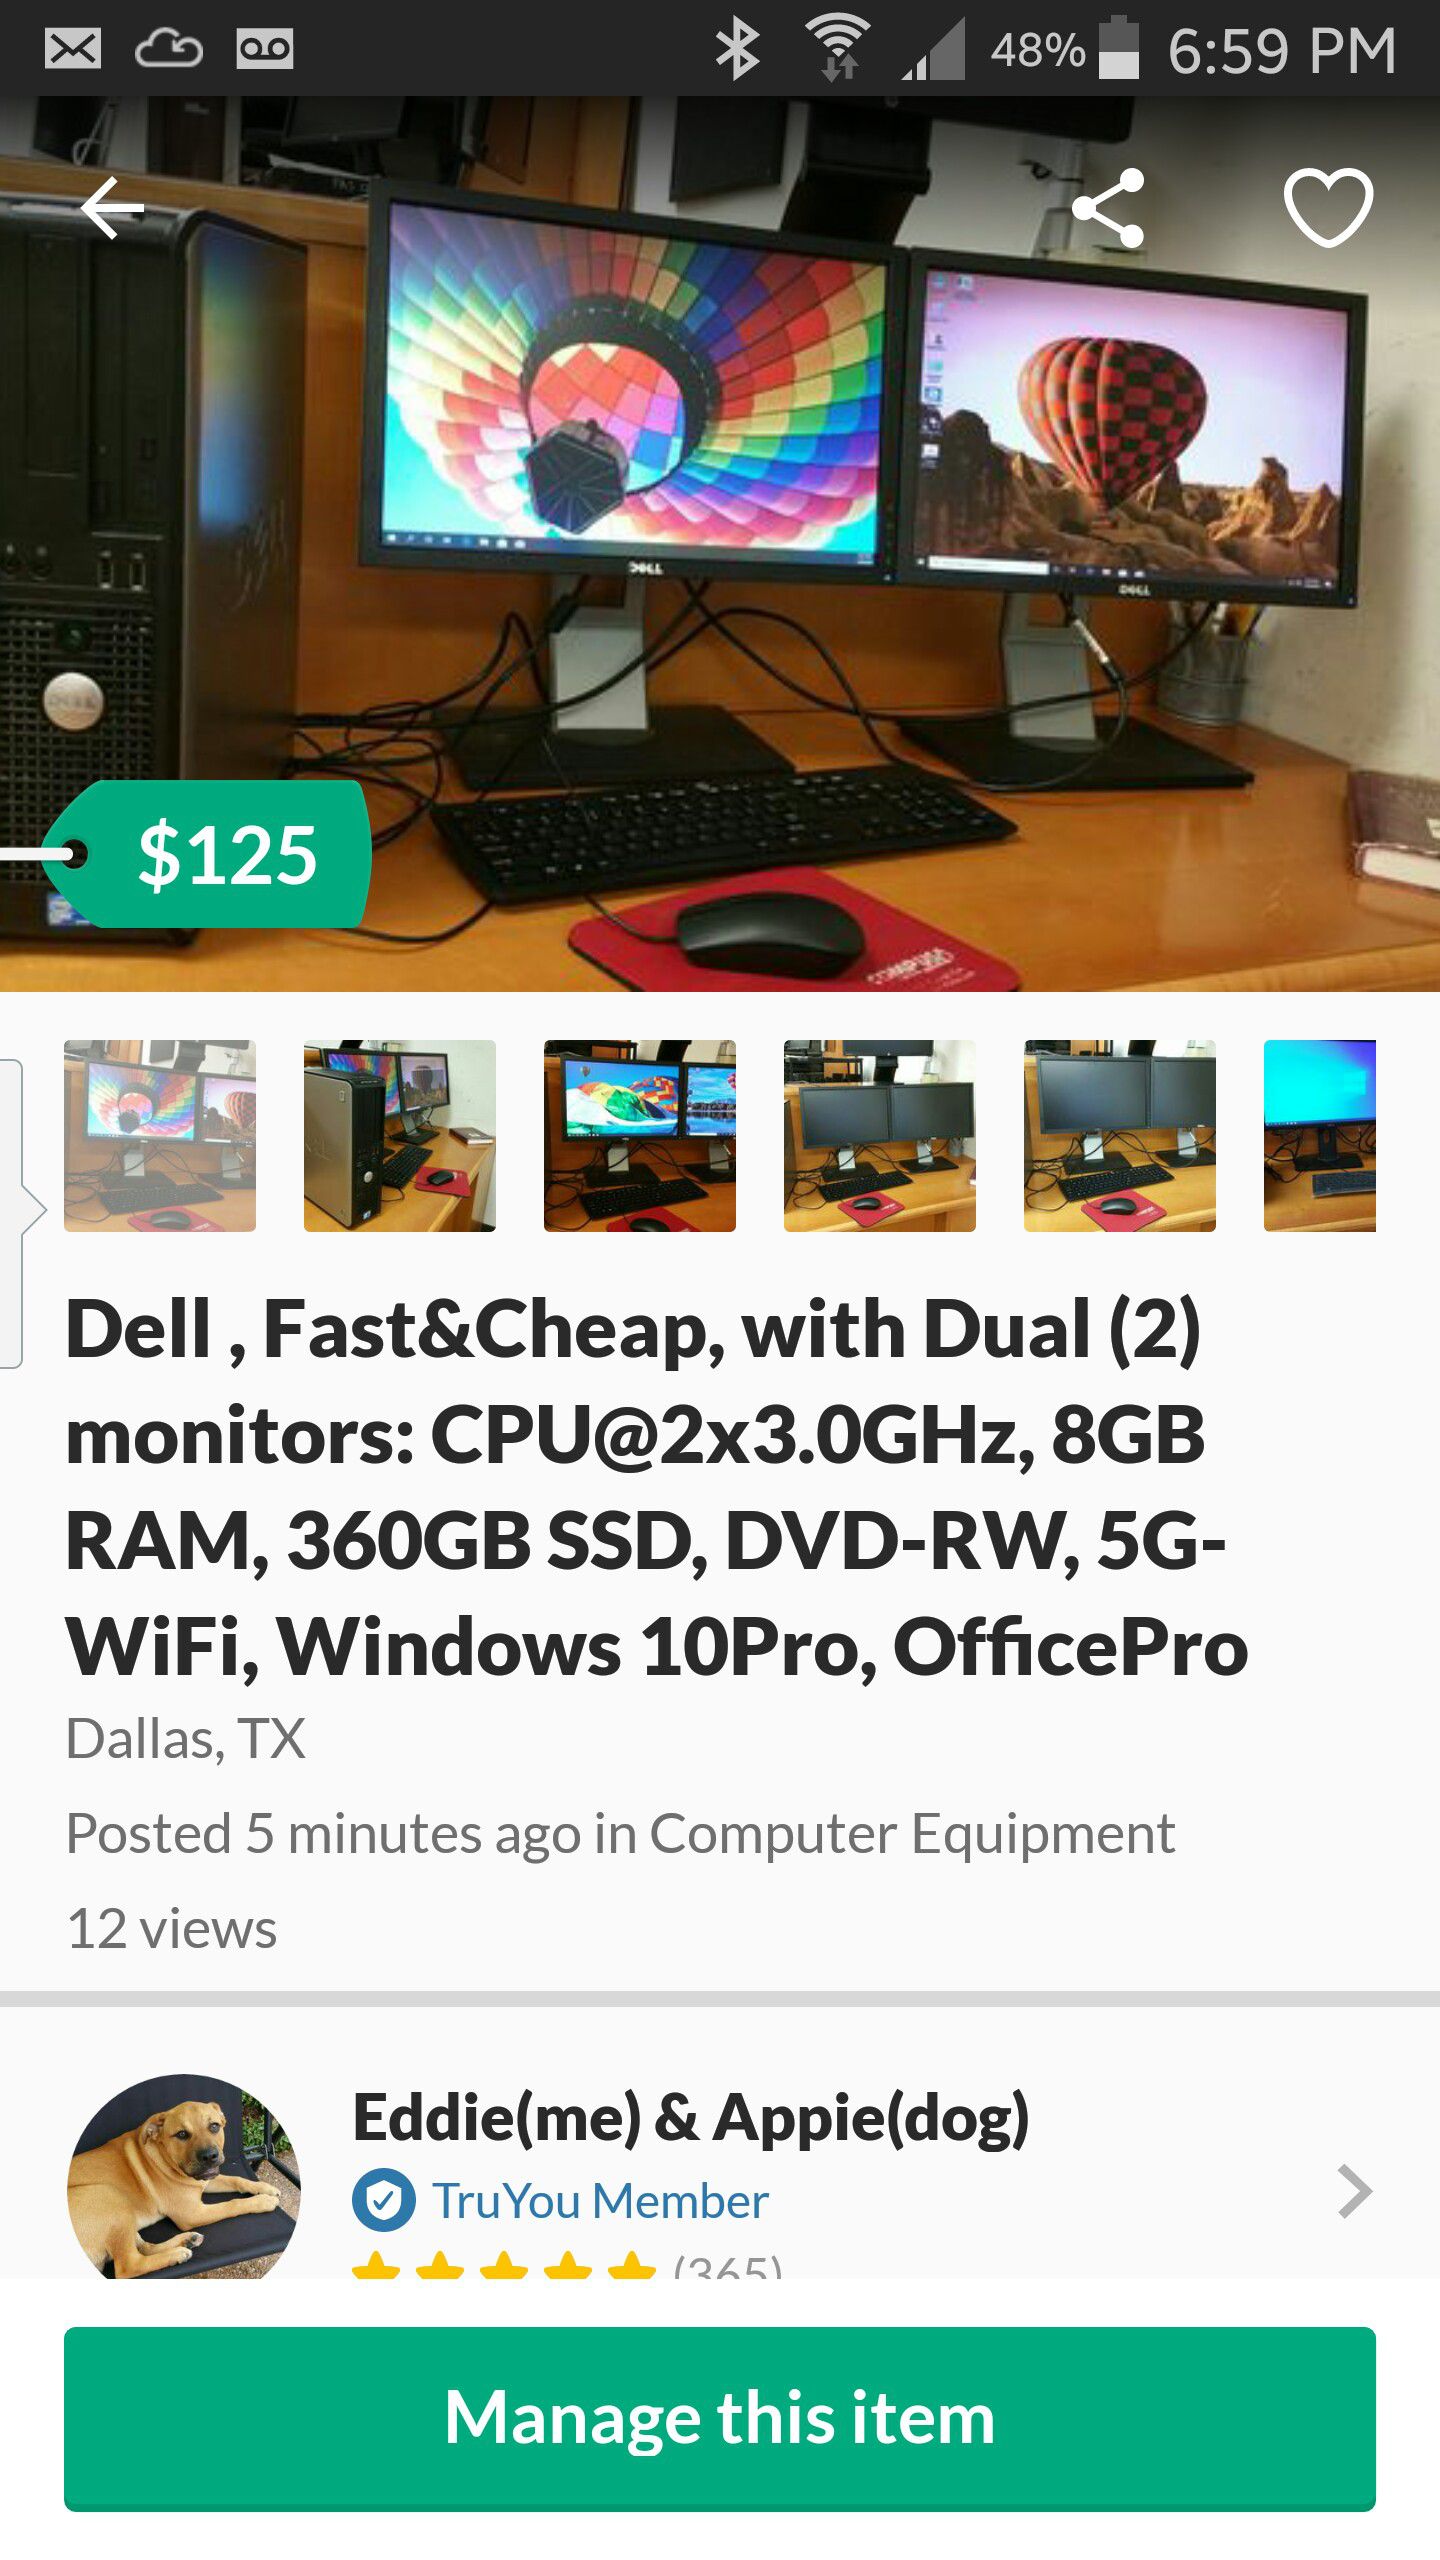 Dell , Fast&Cheap, with Dual (2) monitors: CPU@2x3.0GHz, 8GB RAM, 360GB SSD, DVD-RW, 5G-WiFi, Windows 10Pro, OfficePro